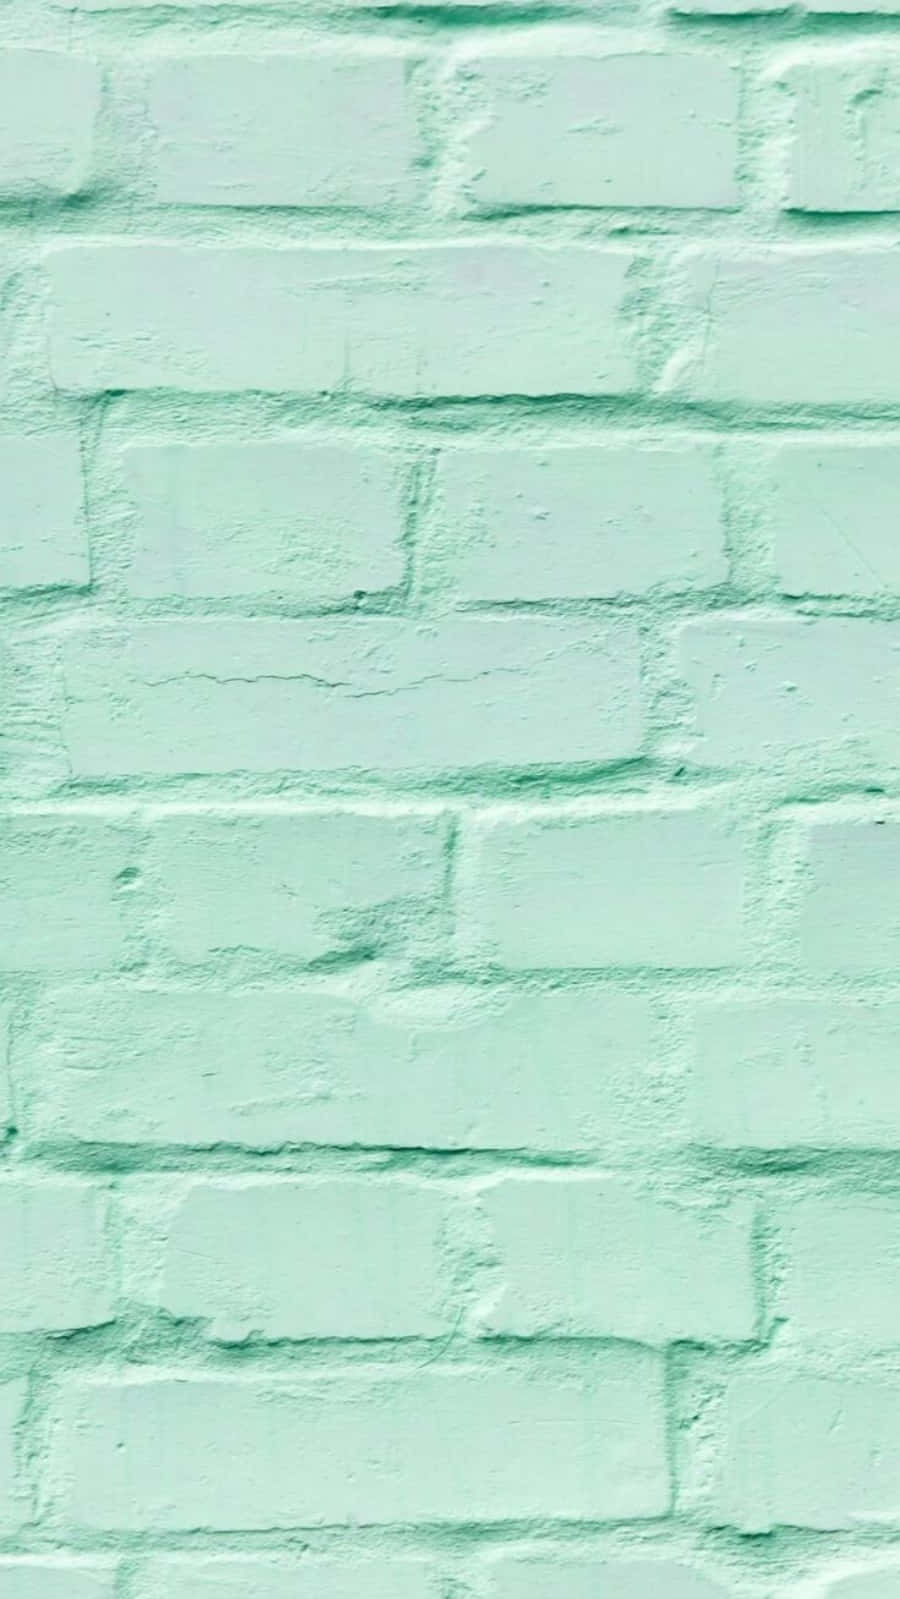 pastel mint green background